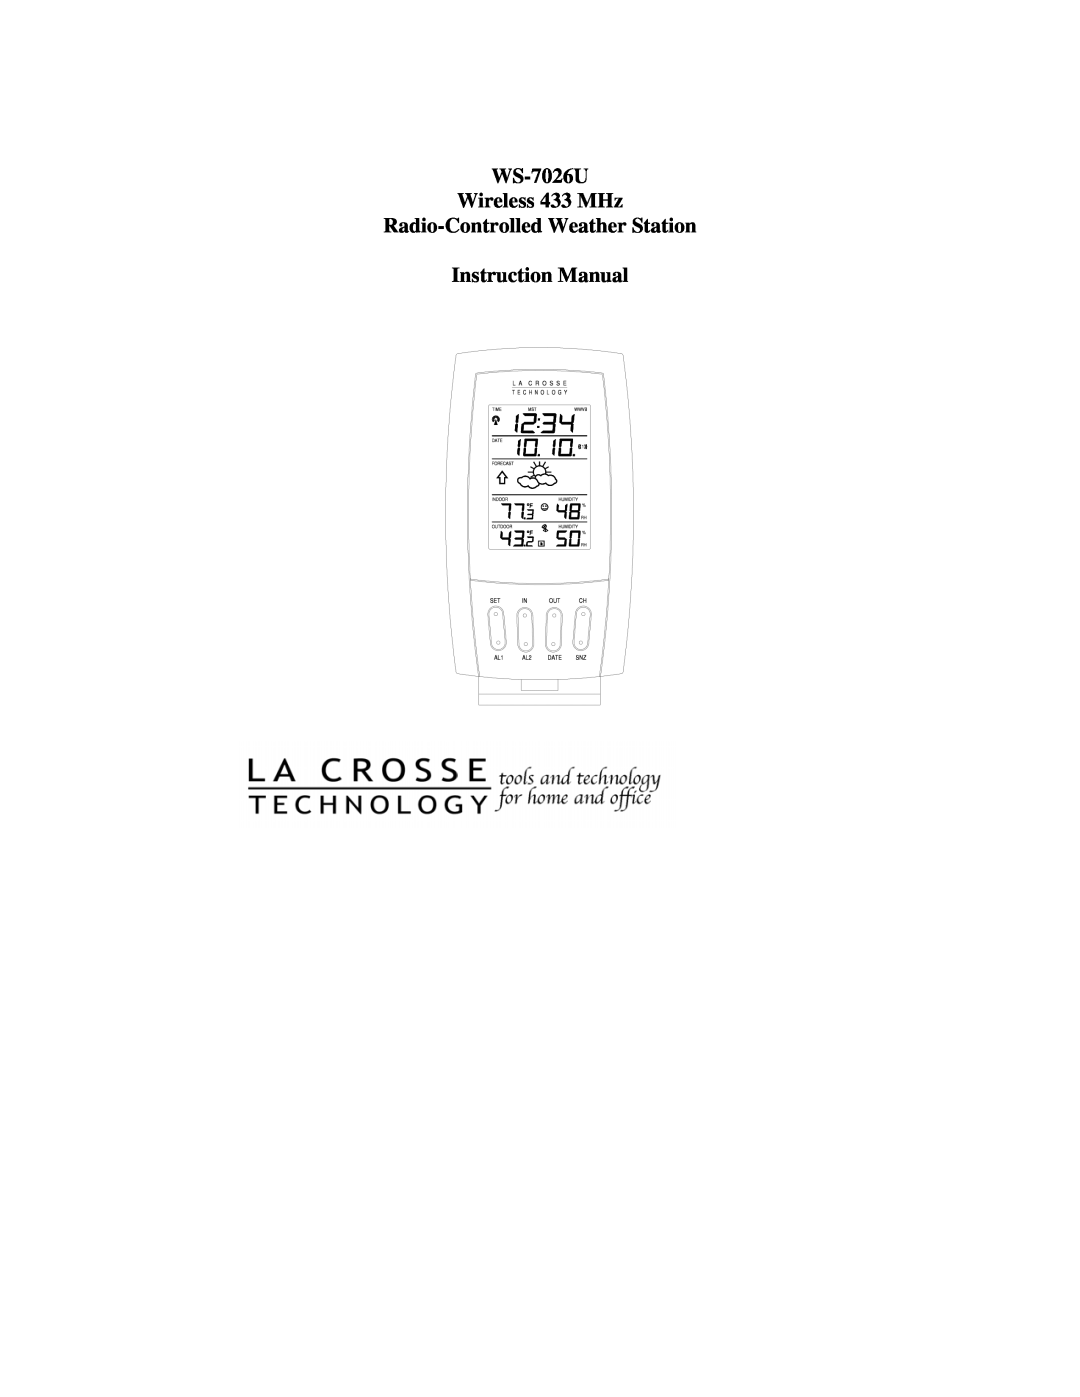 La Crosse Technology instruction manual WS-7026U Wireless 433 MHz Radio-Controlled Weather Station, Instruction Manual 